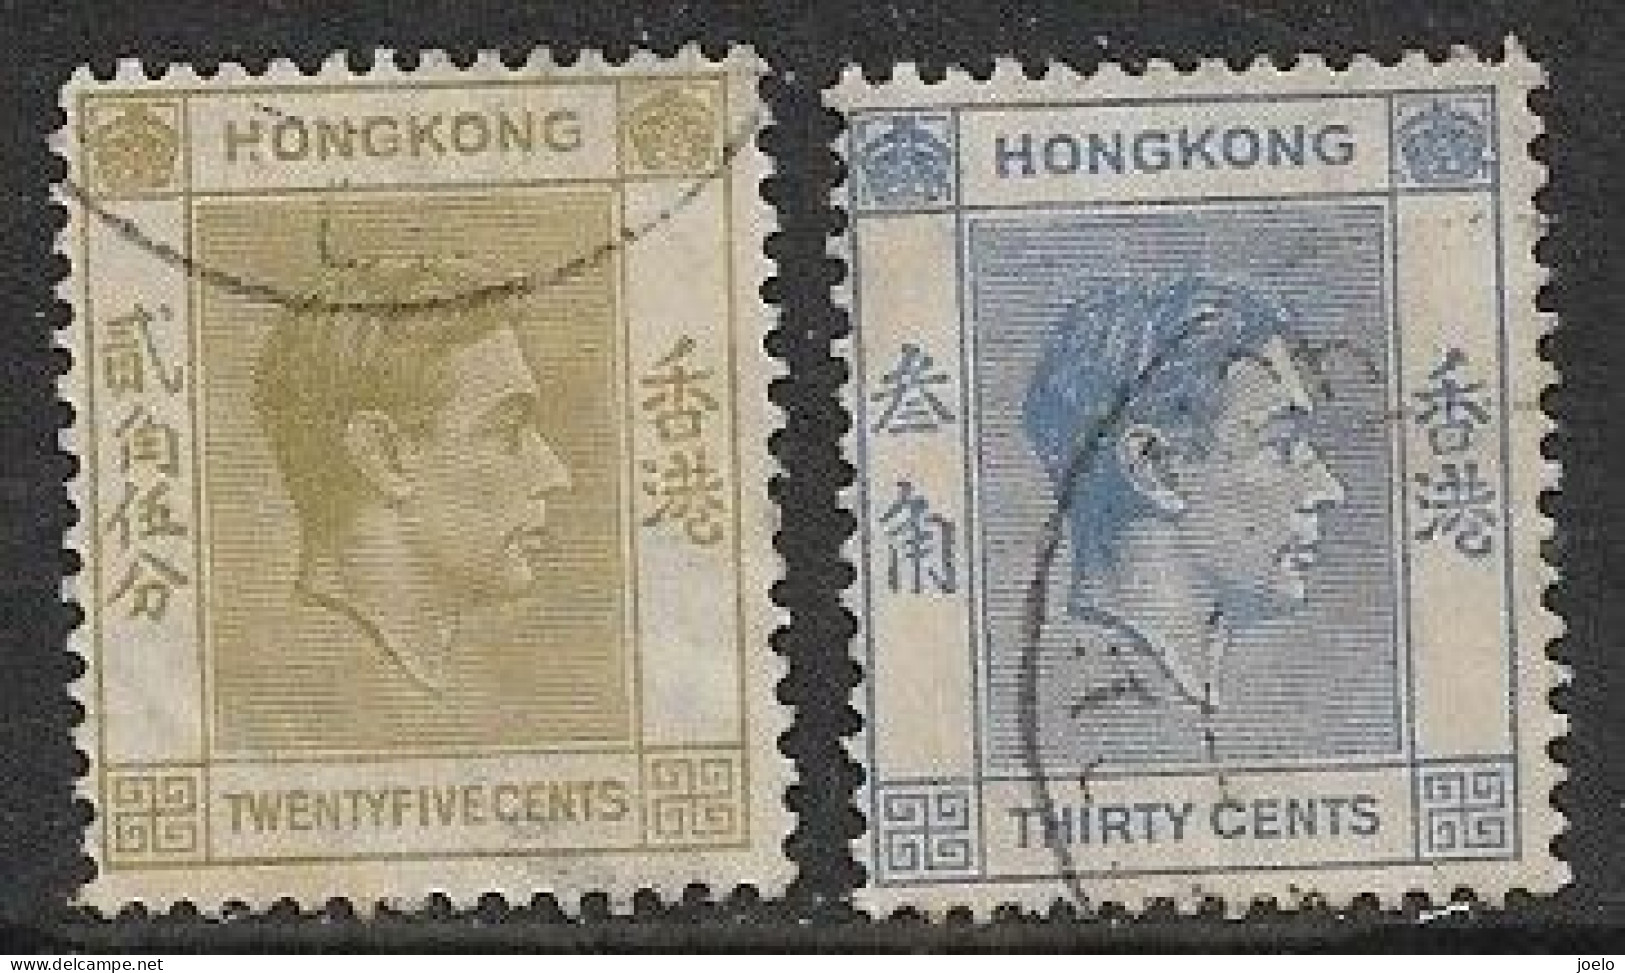 HONG KONG KGVl 1938 DEFINITIVES 25c OLIVE & 30c BLUE PAIR - Usati